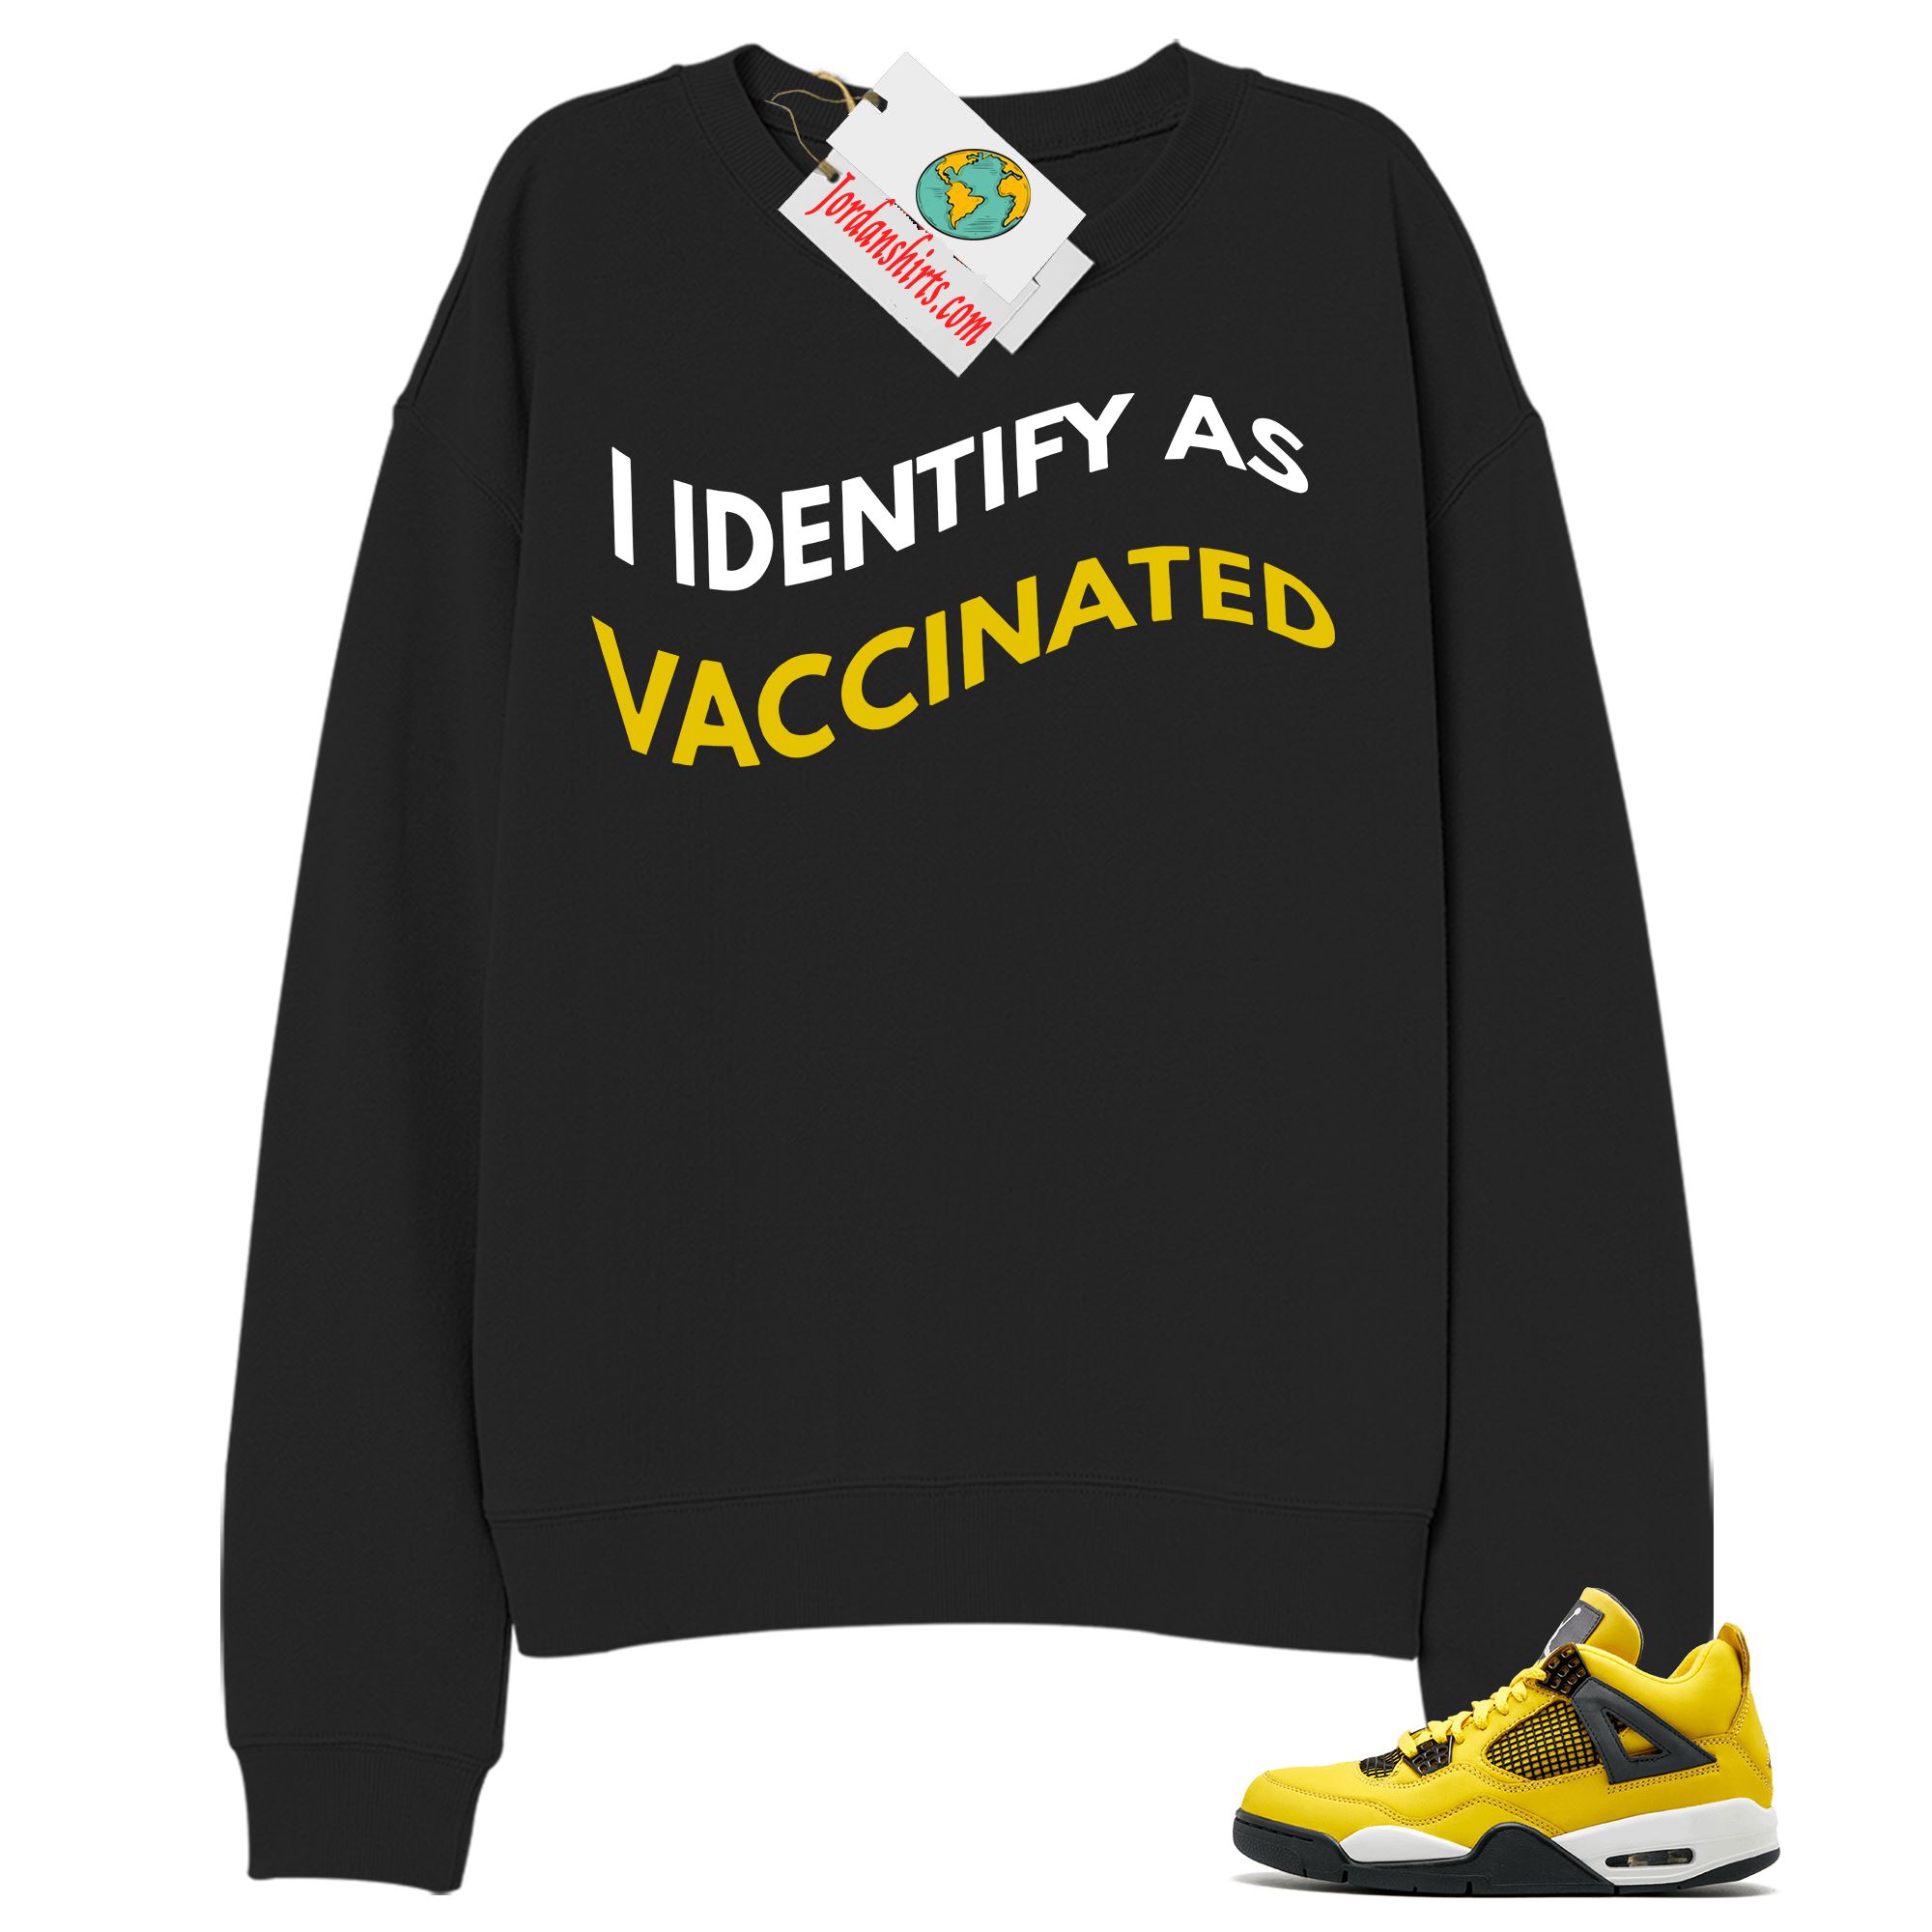 Jordan 4 Sweatshirt, I Identify As Vaccinated Black Sweatshirt Air Jordan 4 Tour Yellow Lightning 4s Size Up To 5xl